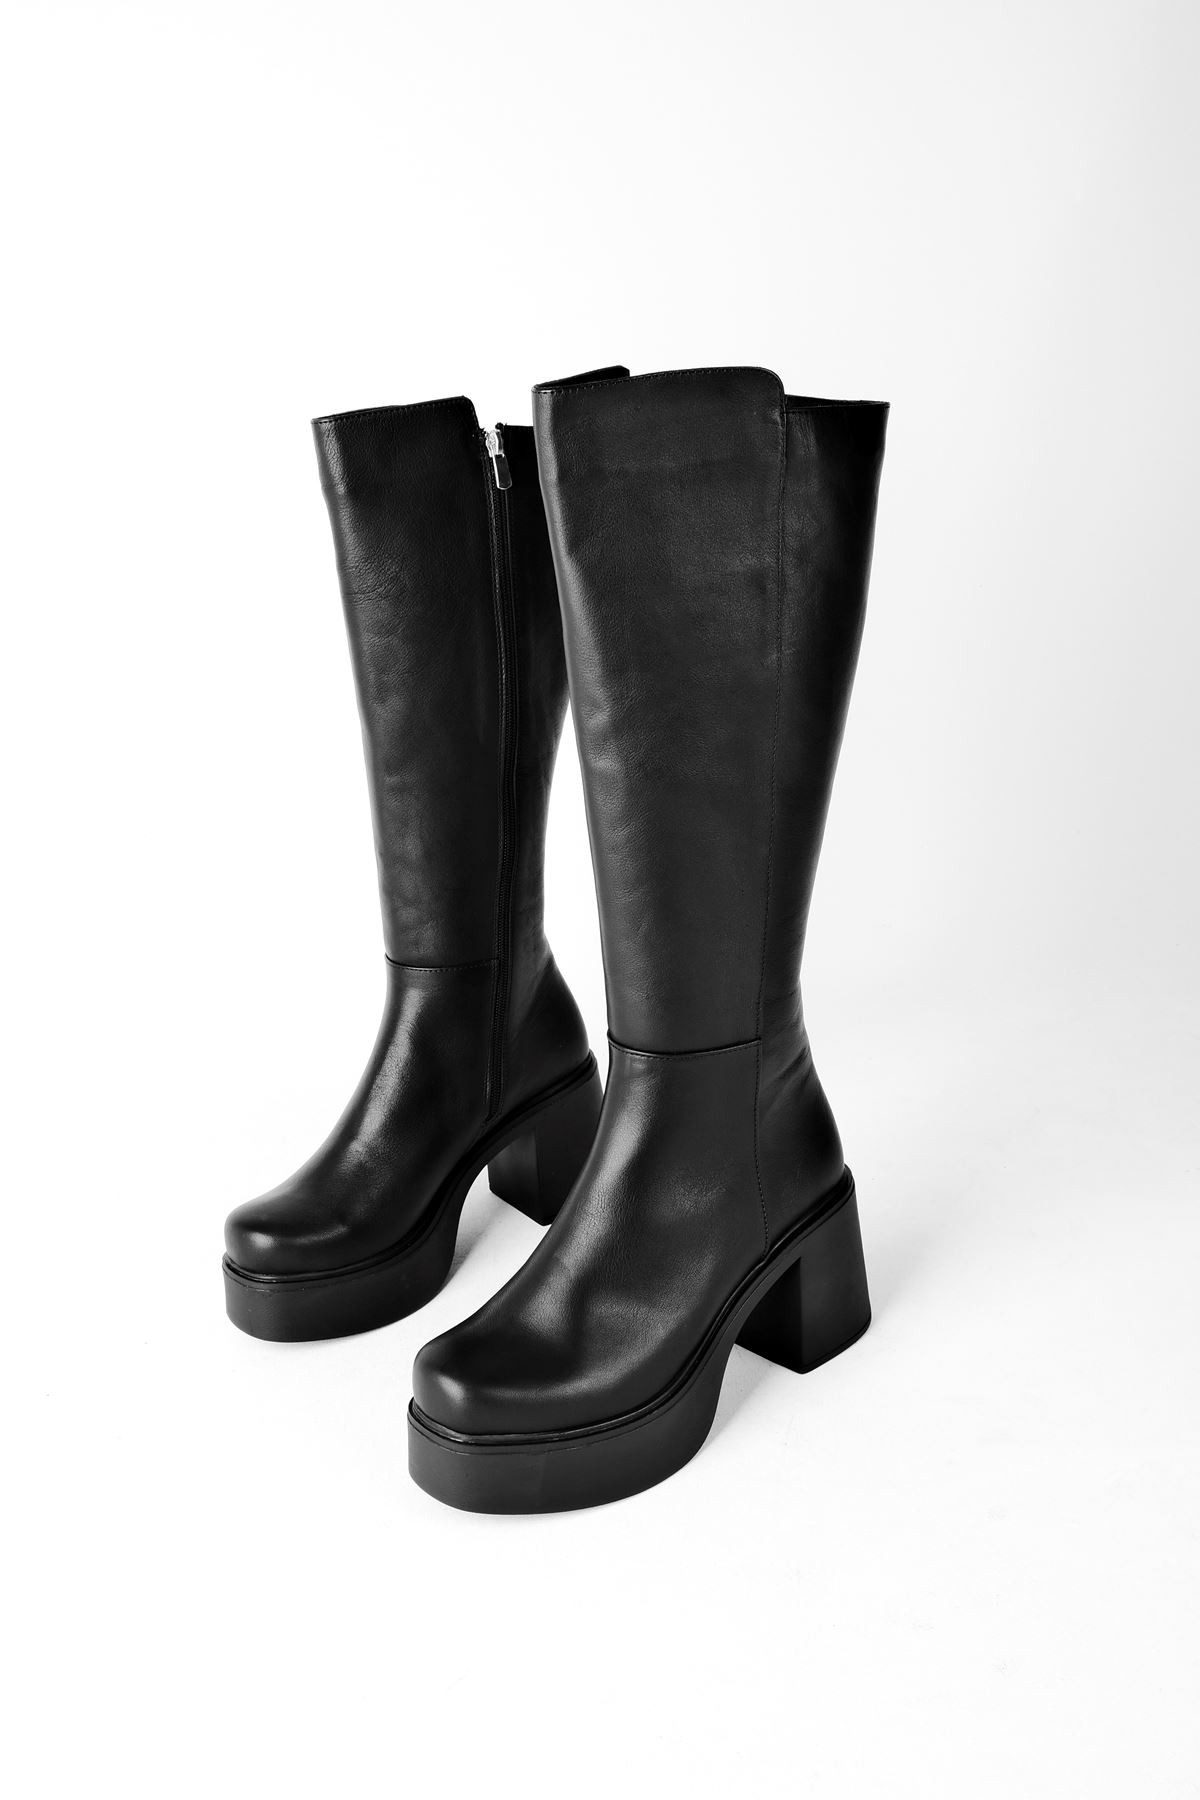 Dione Kadın Hakiki Deri Dolgu Taban Çizme - Siyah